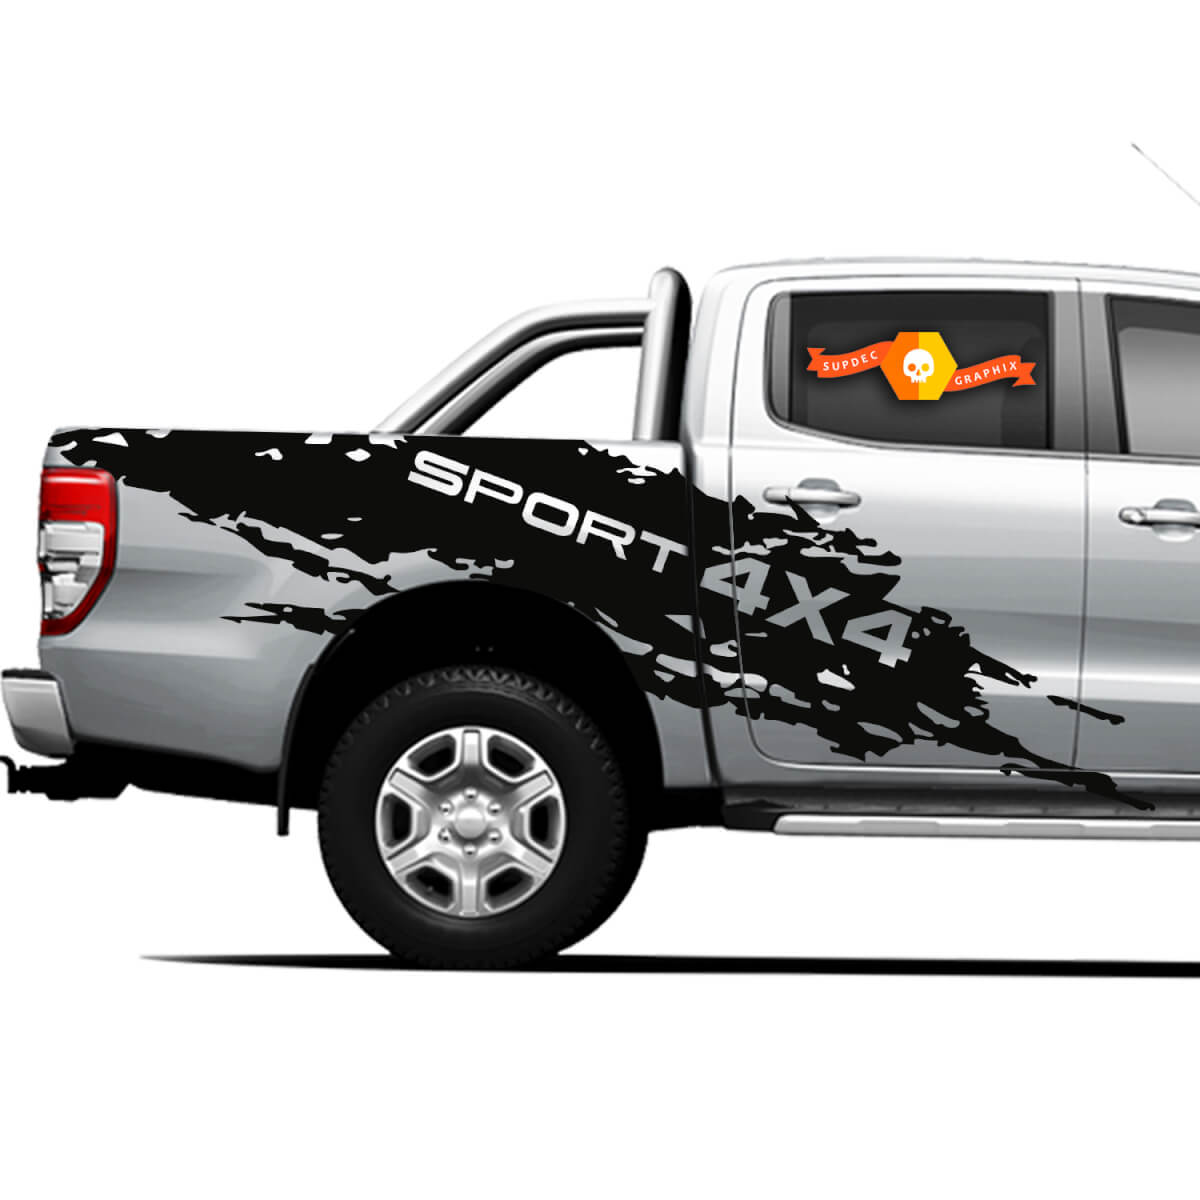 4×4 Sport Truck Splash side bed Graphics Decals for Ford Ranger 2